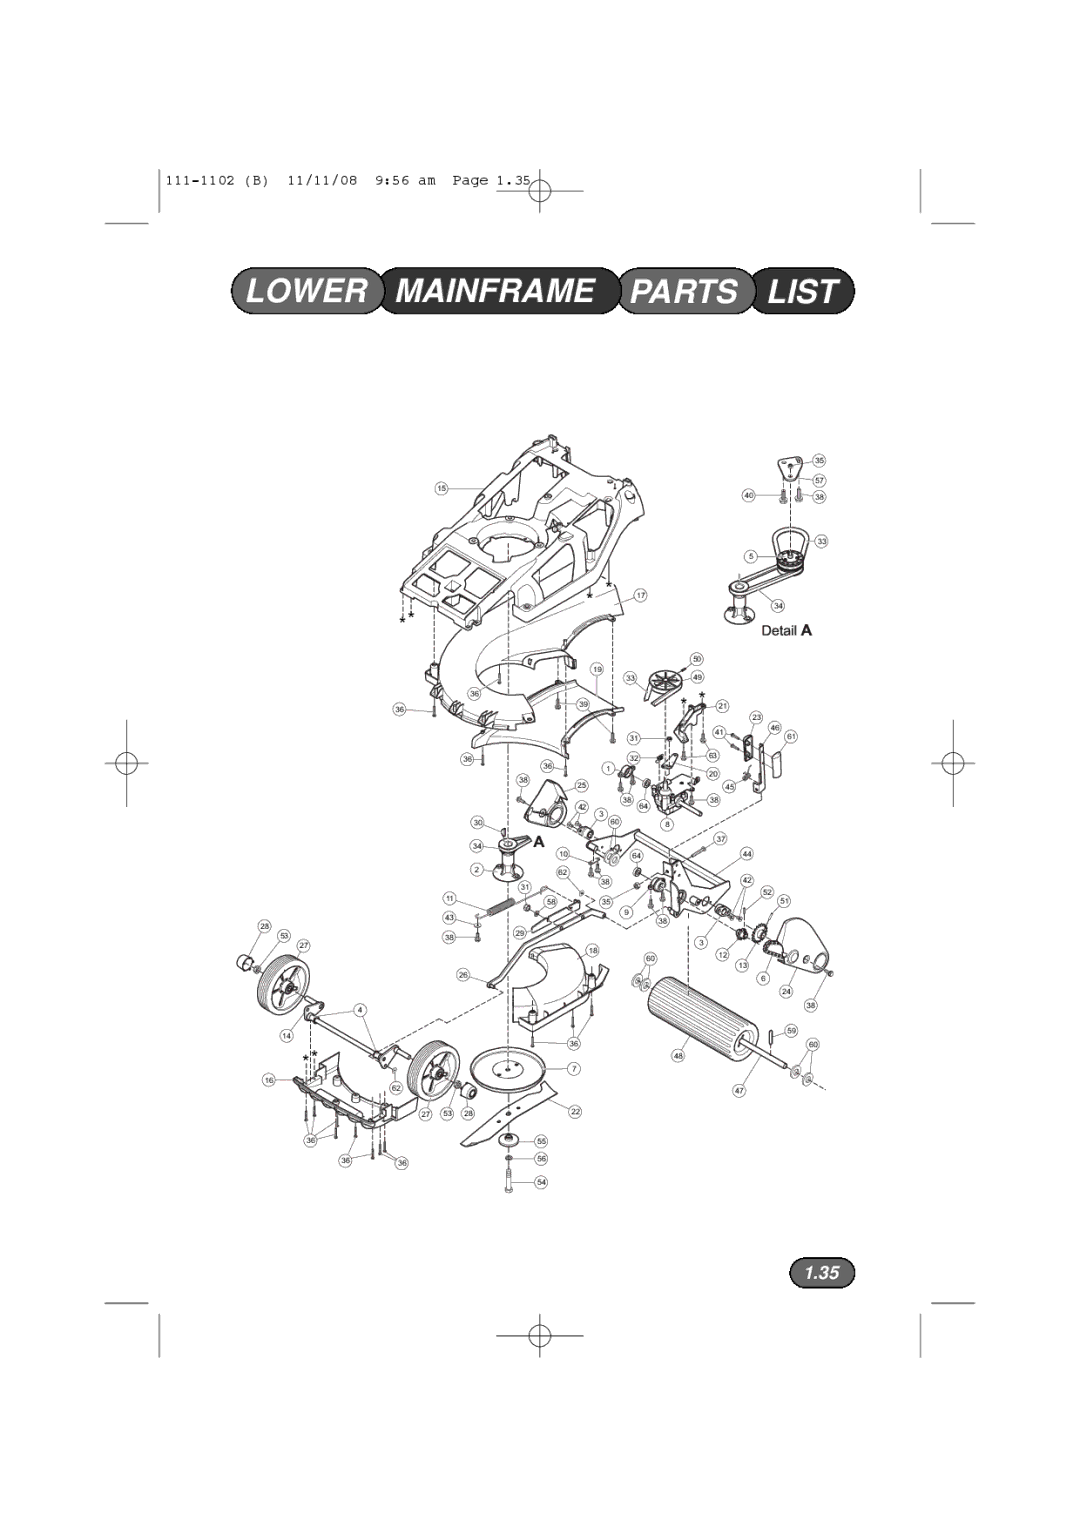 Spirit 619E, 617E manual Lower Mainframe Parts List 